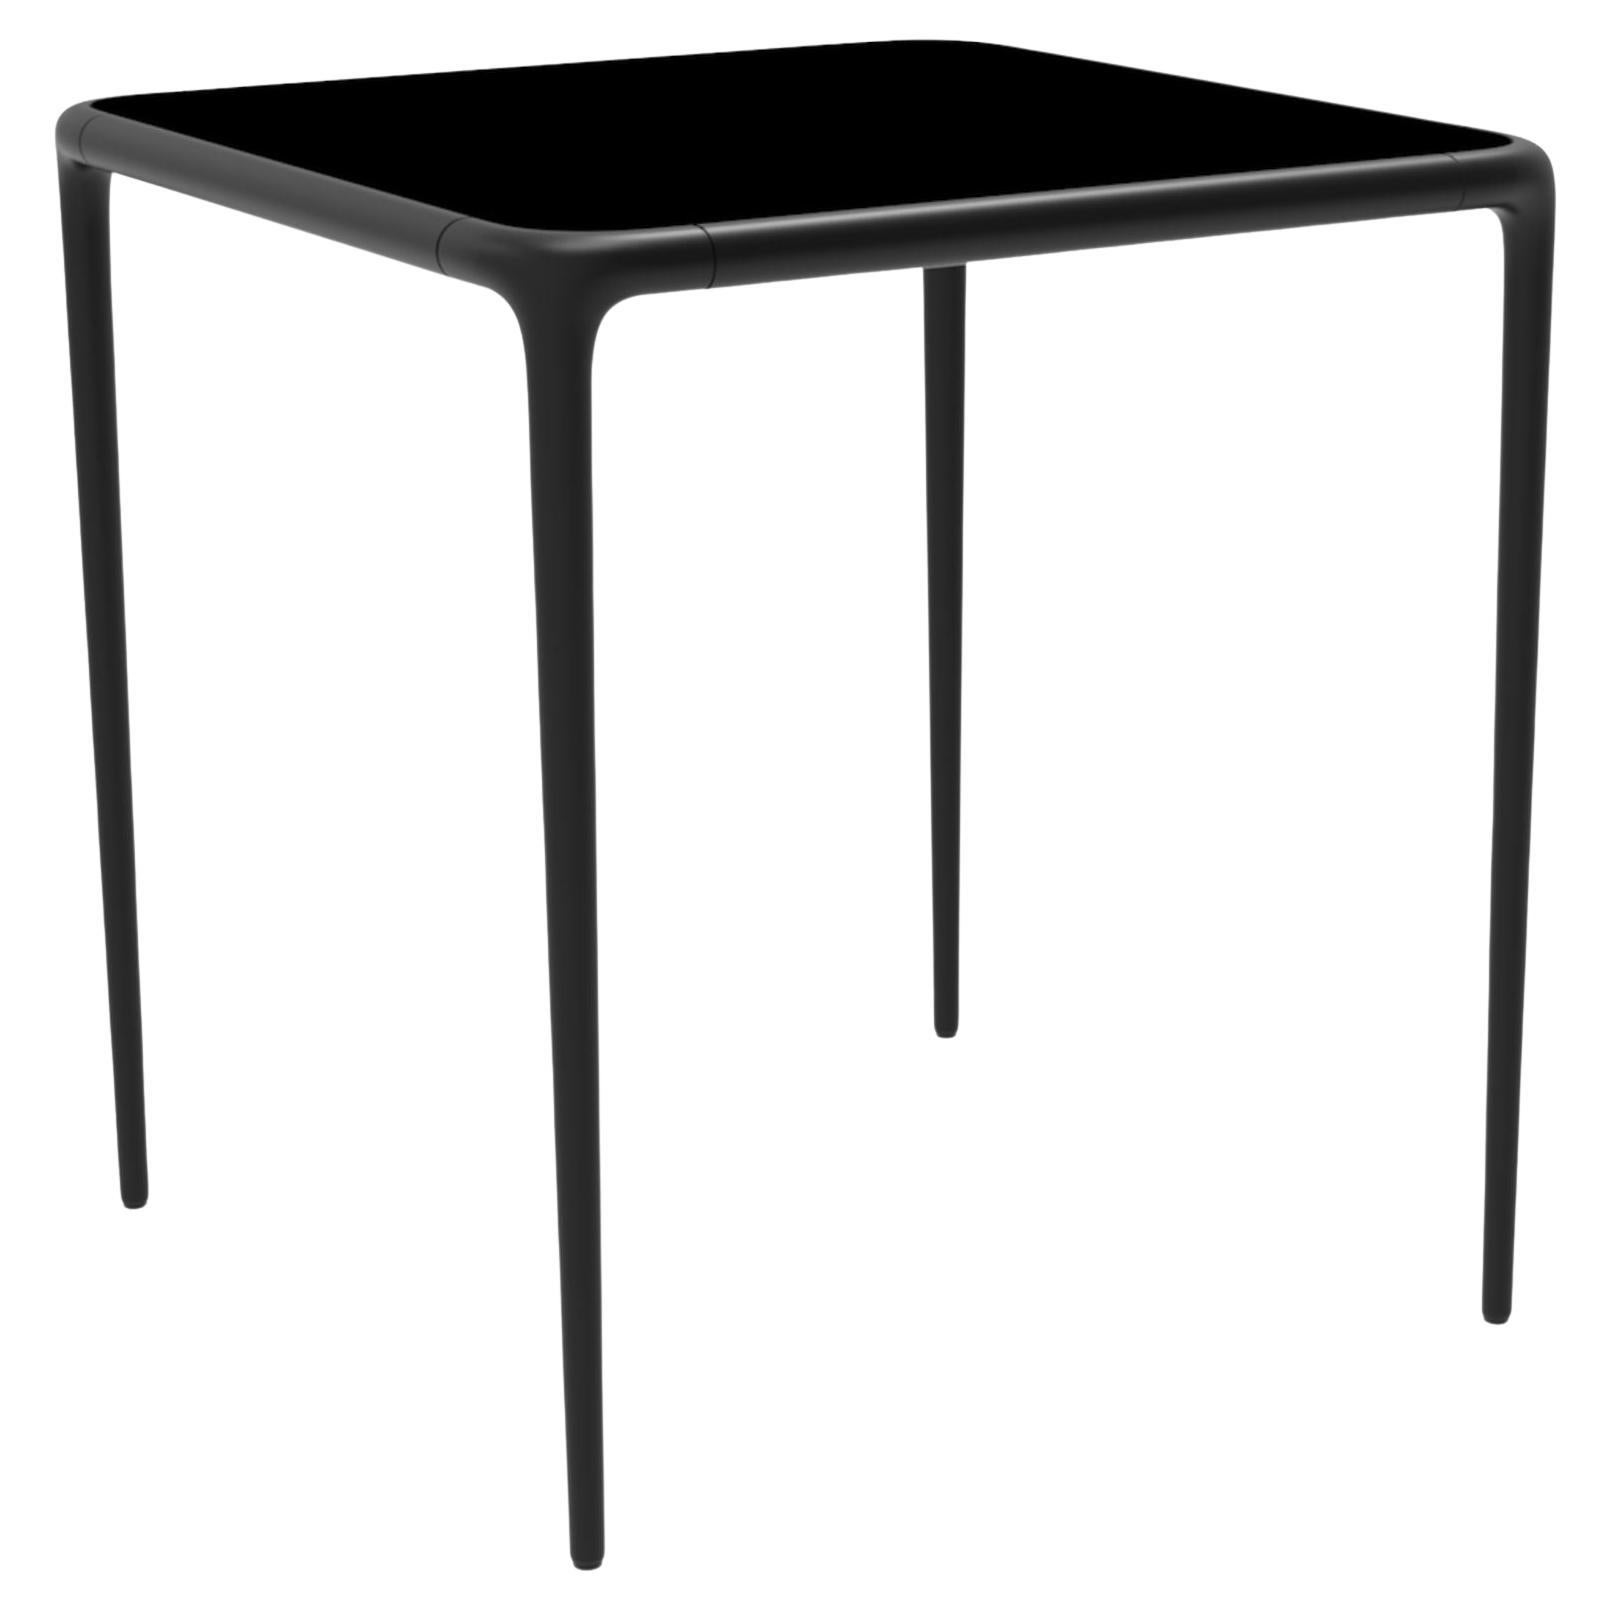 Xaloc Black Glass Top Table 70 by Mowee